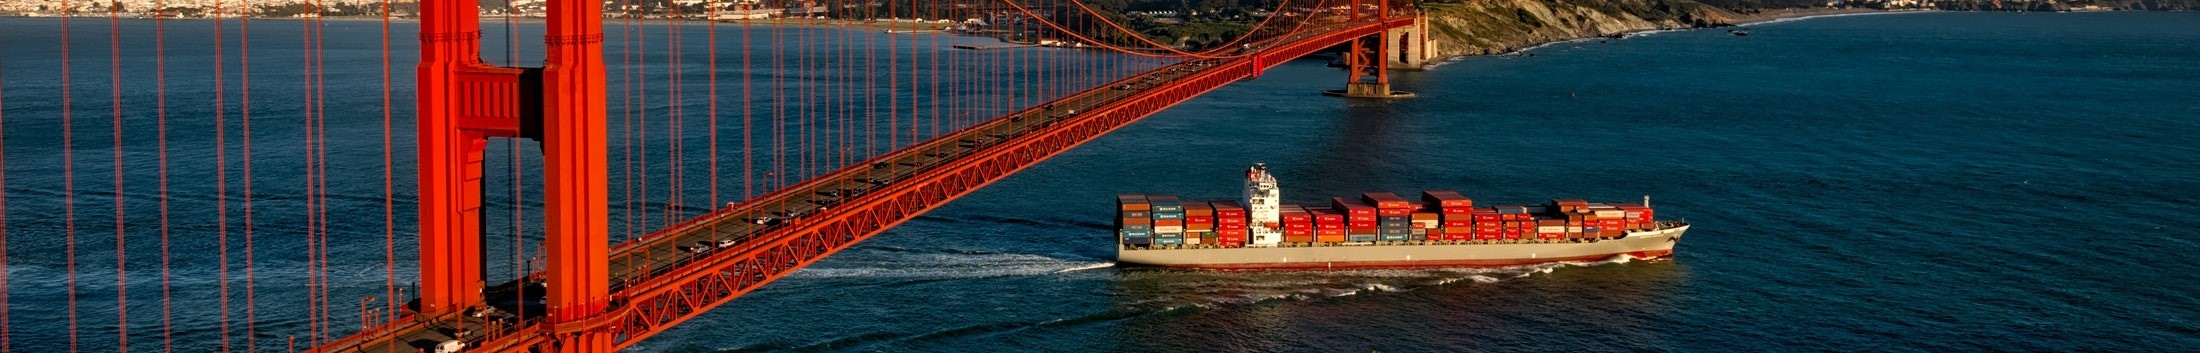 Container ship passing under Golden Gate Bridge